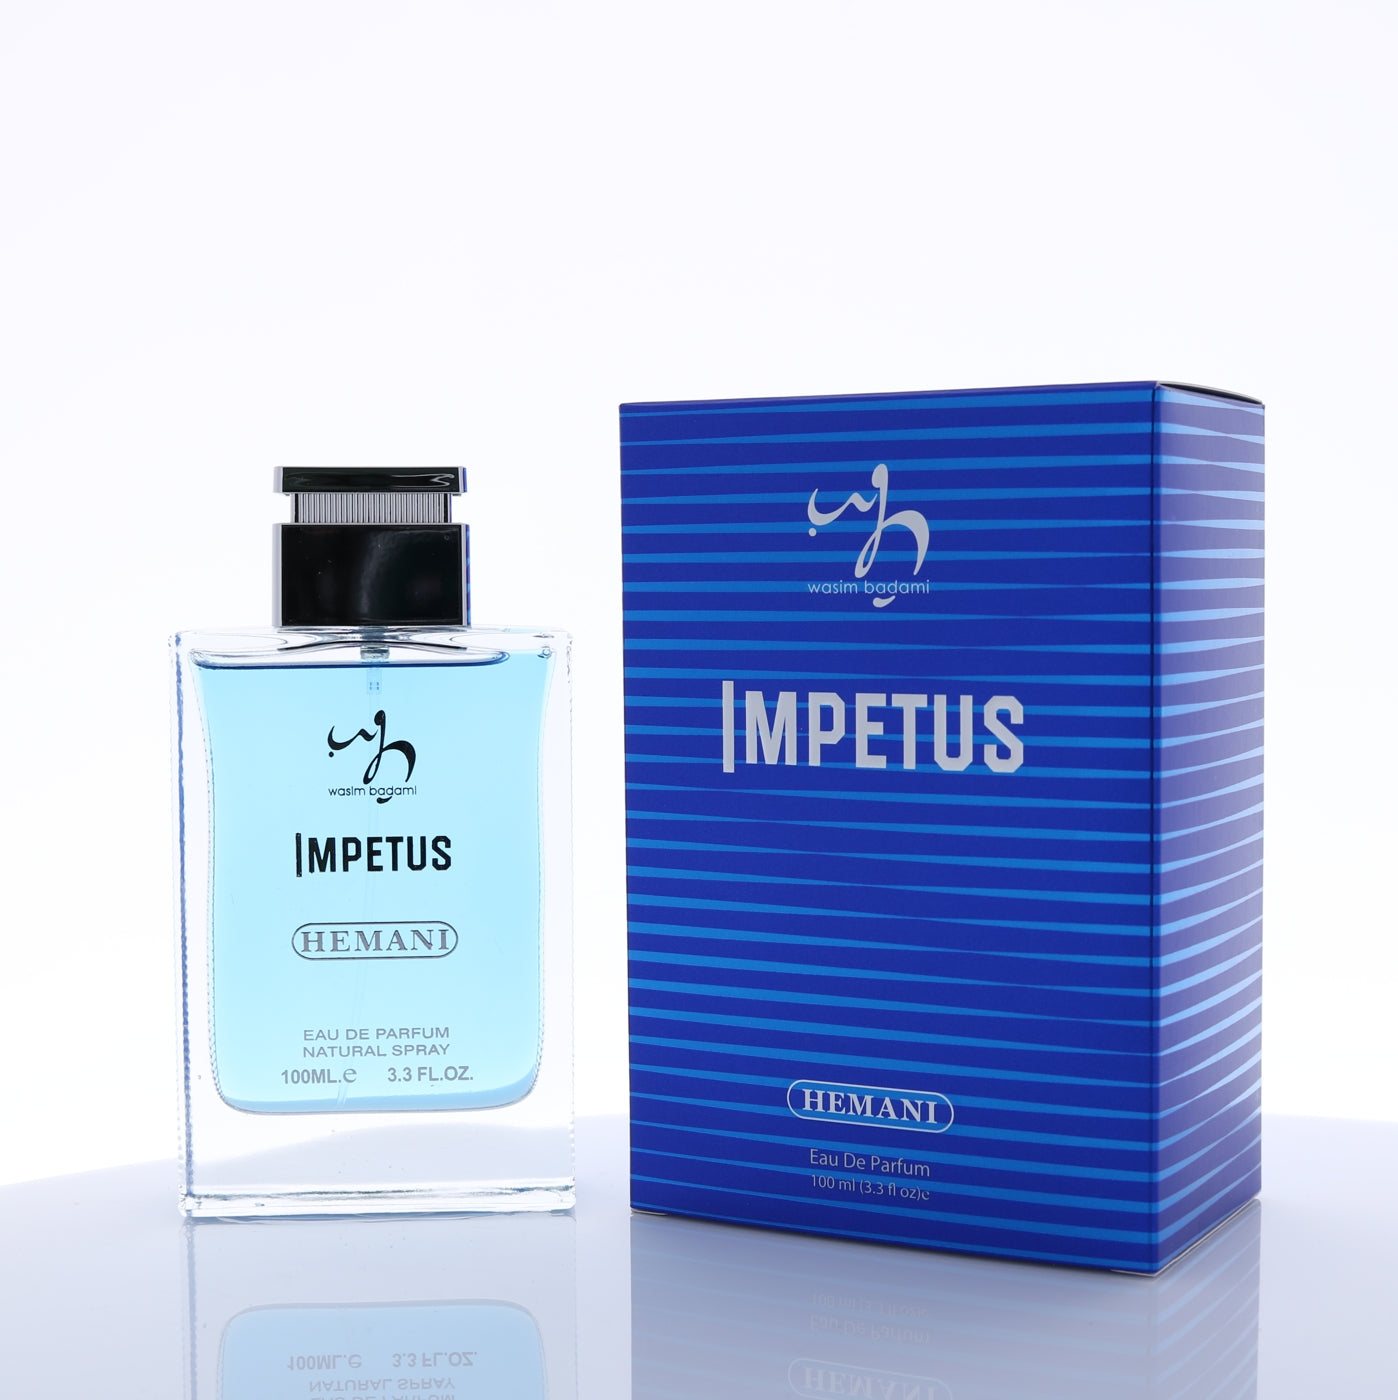 wb-by-hemani-impetus-perfume-eau-de-parfum100ml-3-3-fl-oz-for-men-1